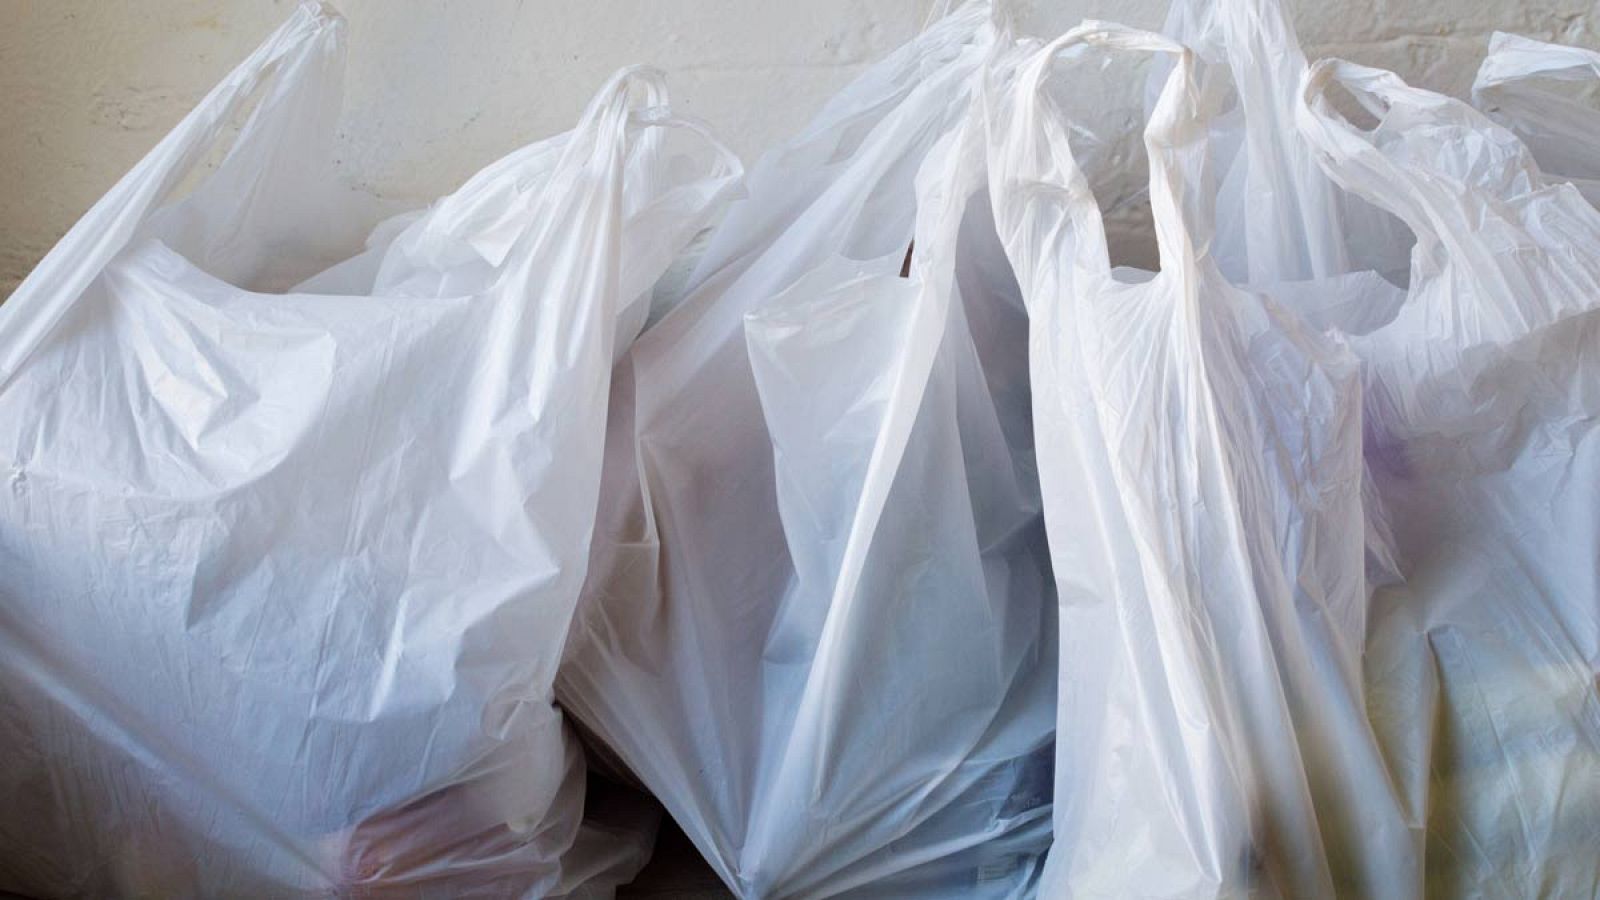 Bolsas de plástico de un solo uso o no biodegradables.